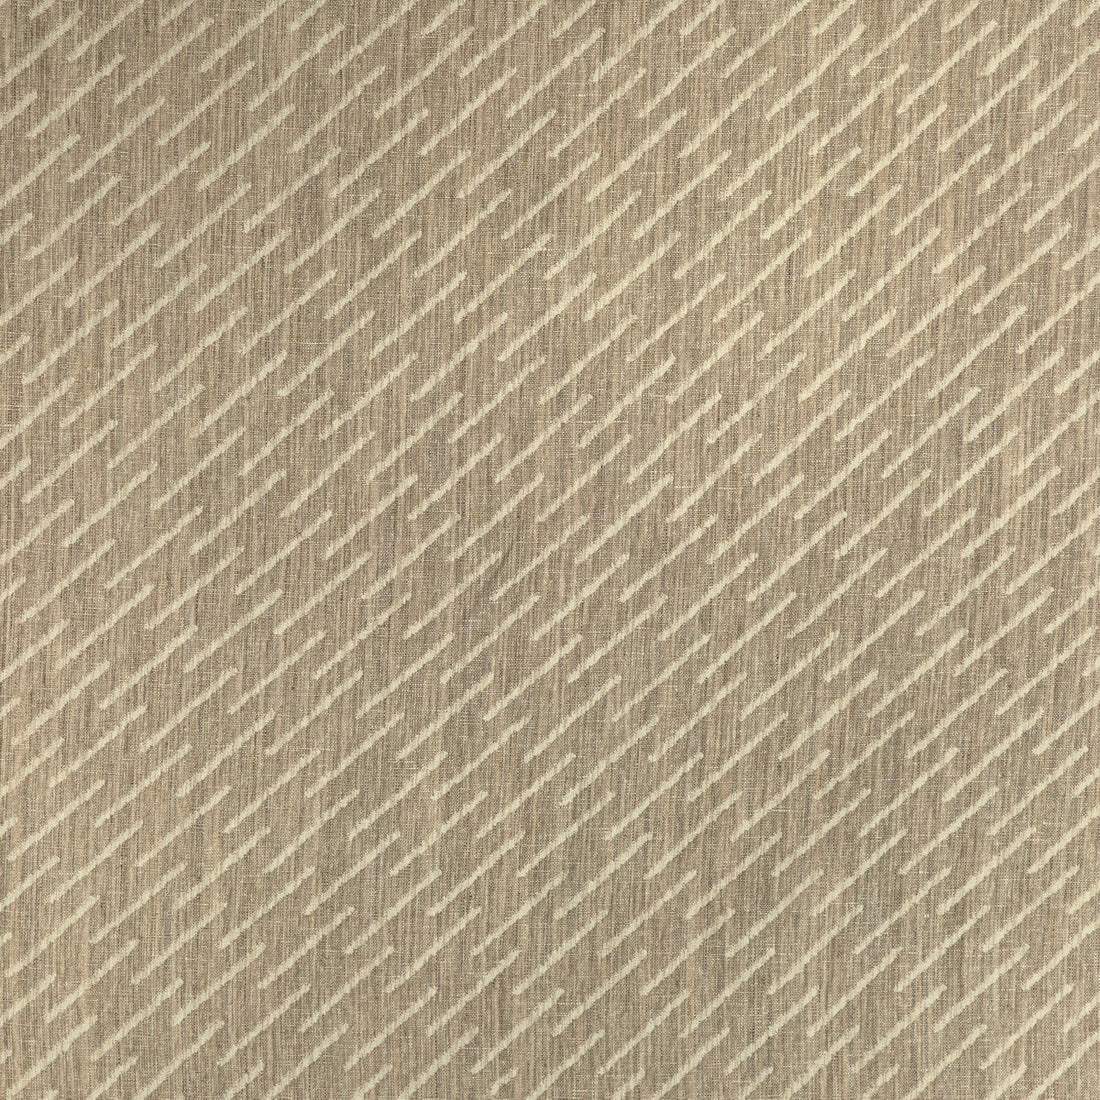 Esker Weave fabric in buff color - pattern GWF-3759.116.0 - by Lee Jofa Modern in the Kelly Wearstler VI collection